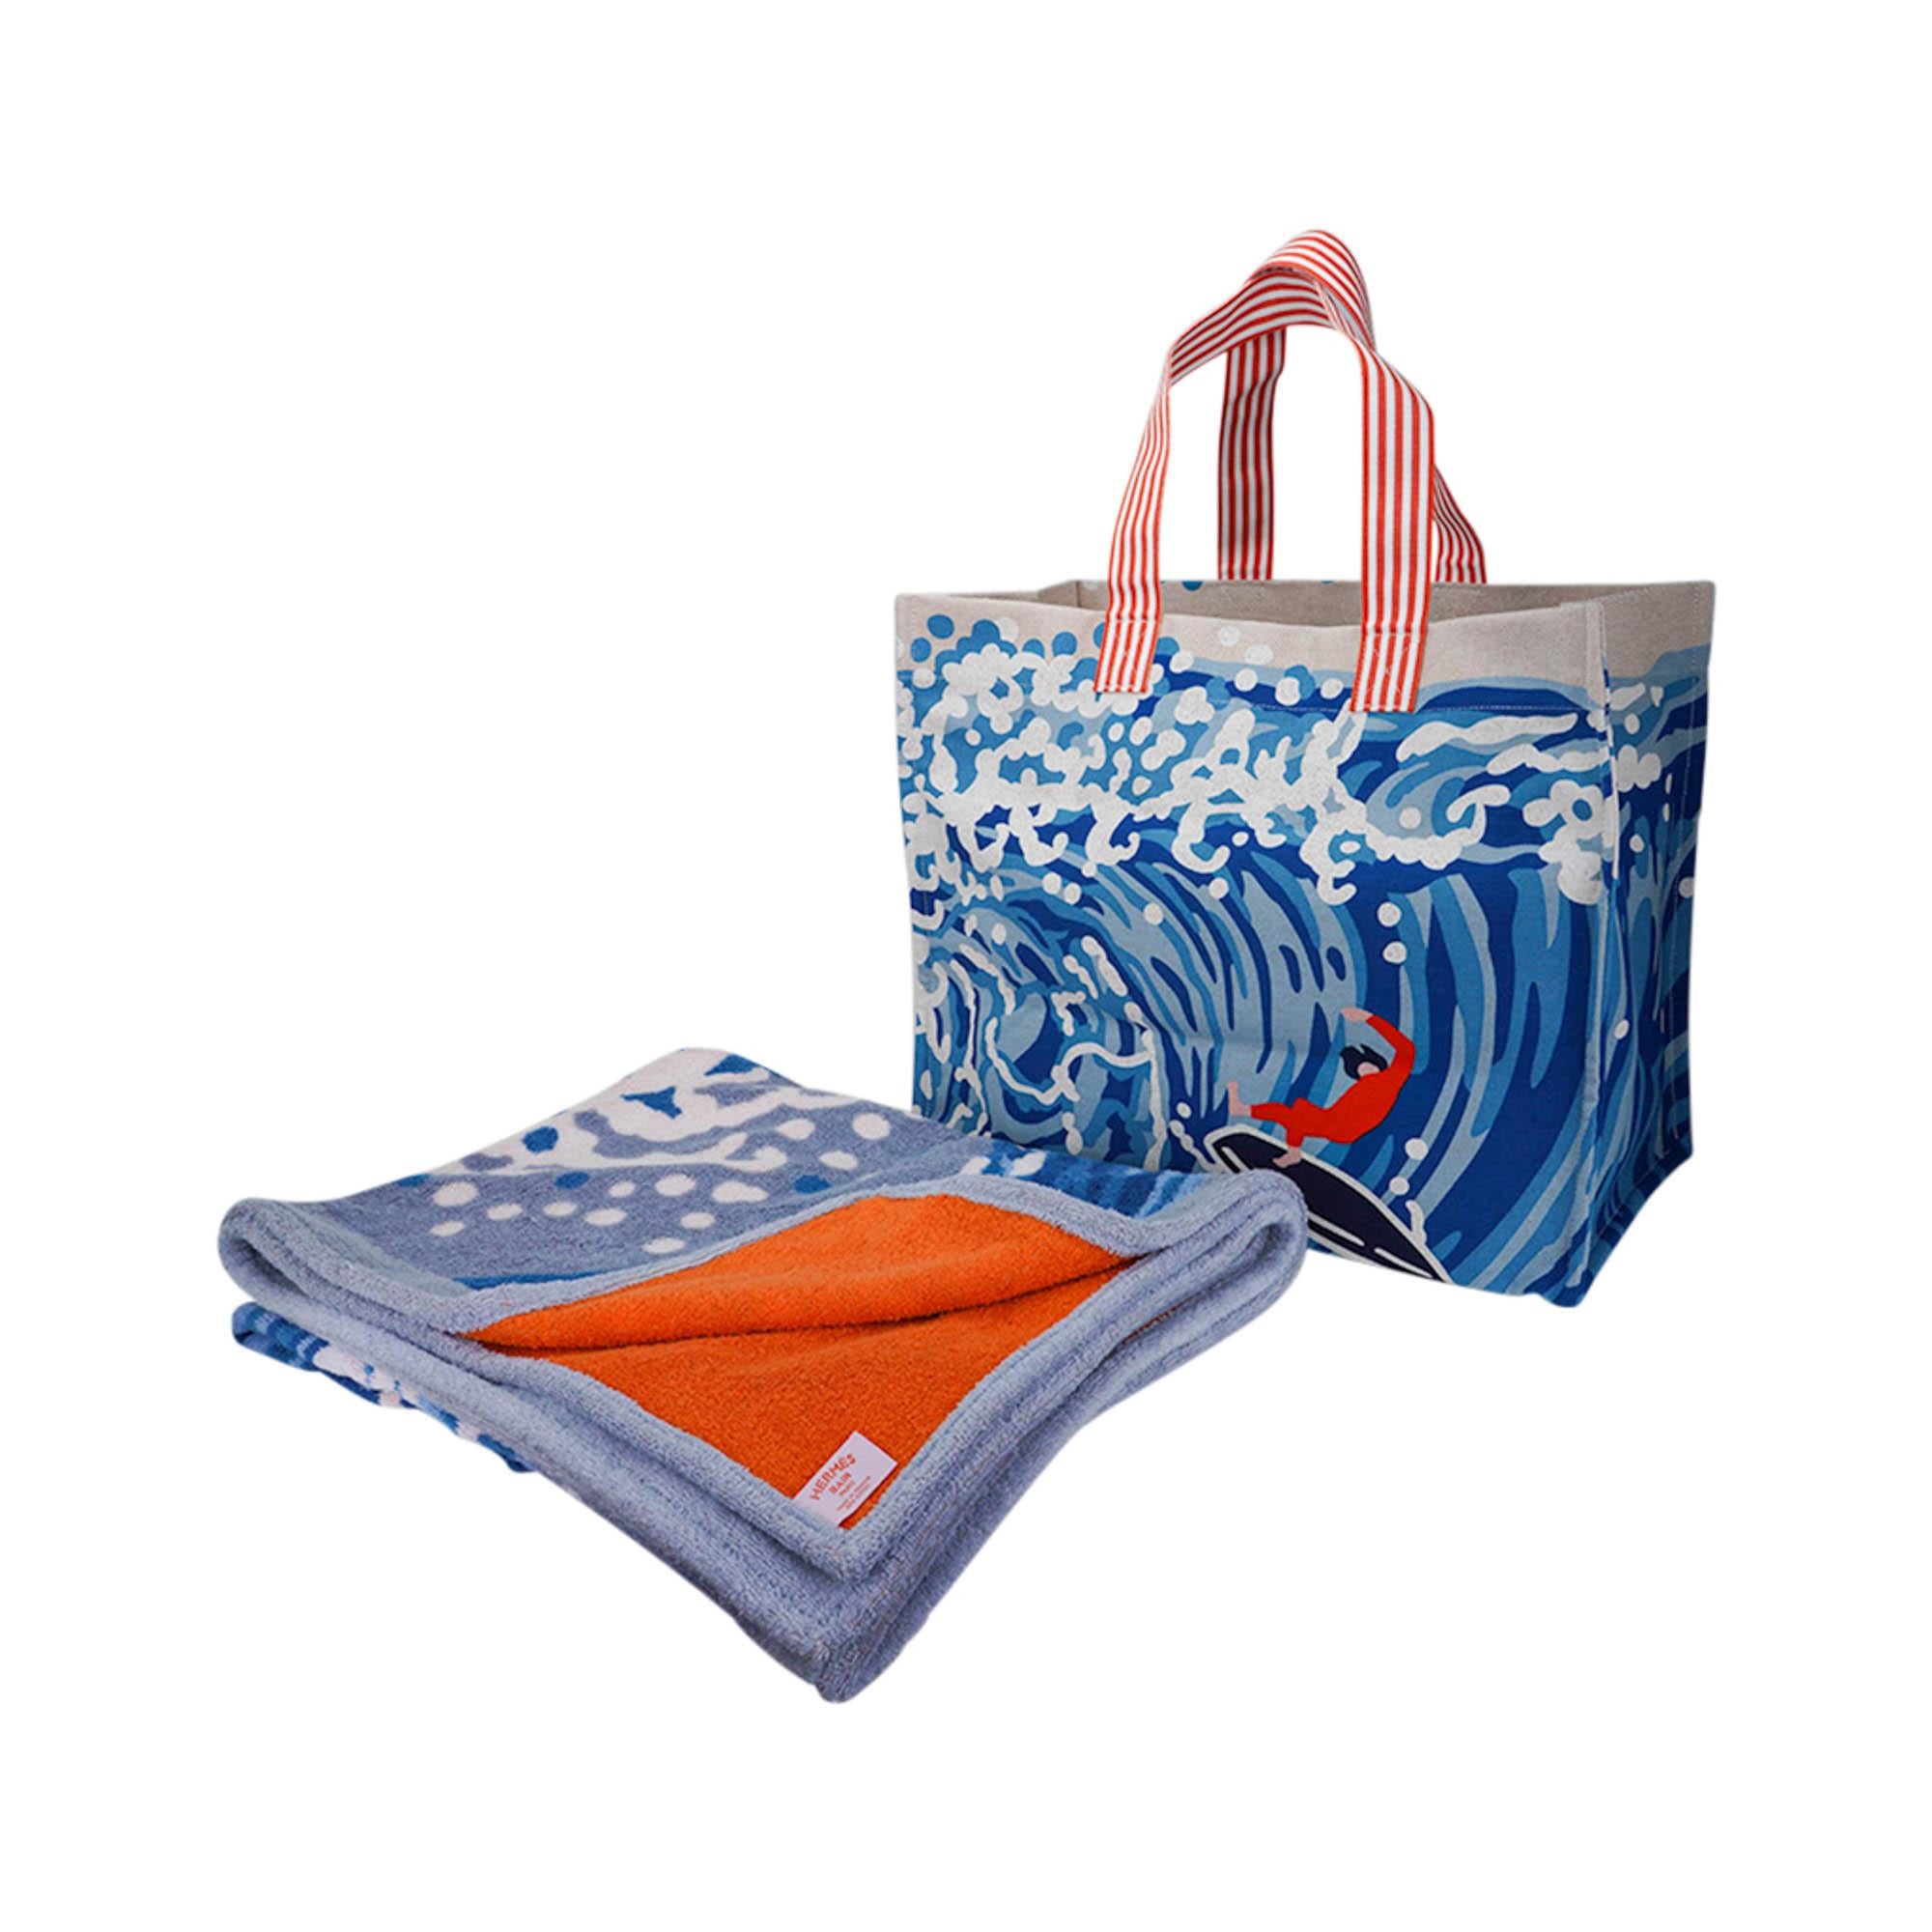 Hermes Beach Wave Tote Printed Toile Denim Bag For Sale 6